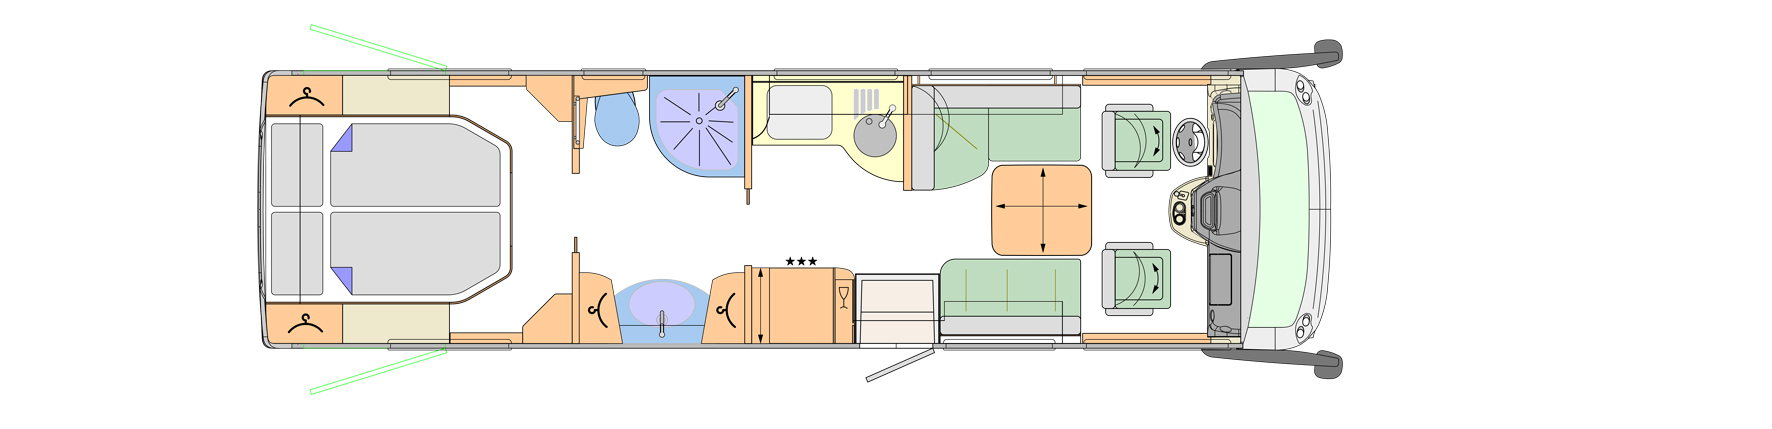 2019 Concorde Charisma 900M A-Class Motorhome Floorplan Layout